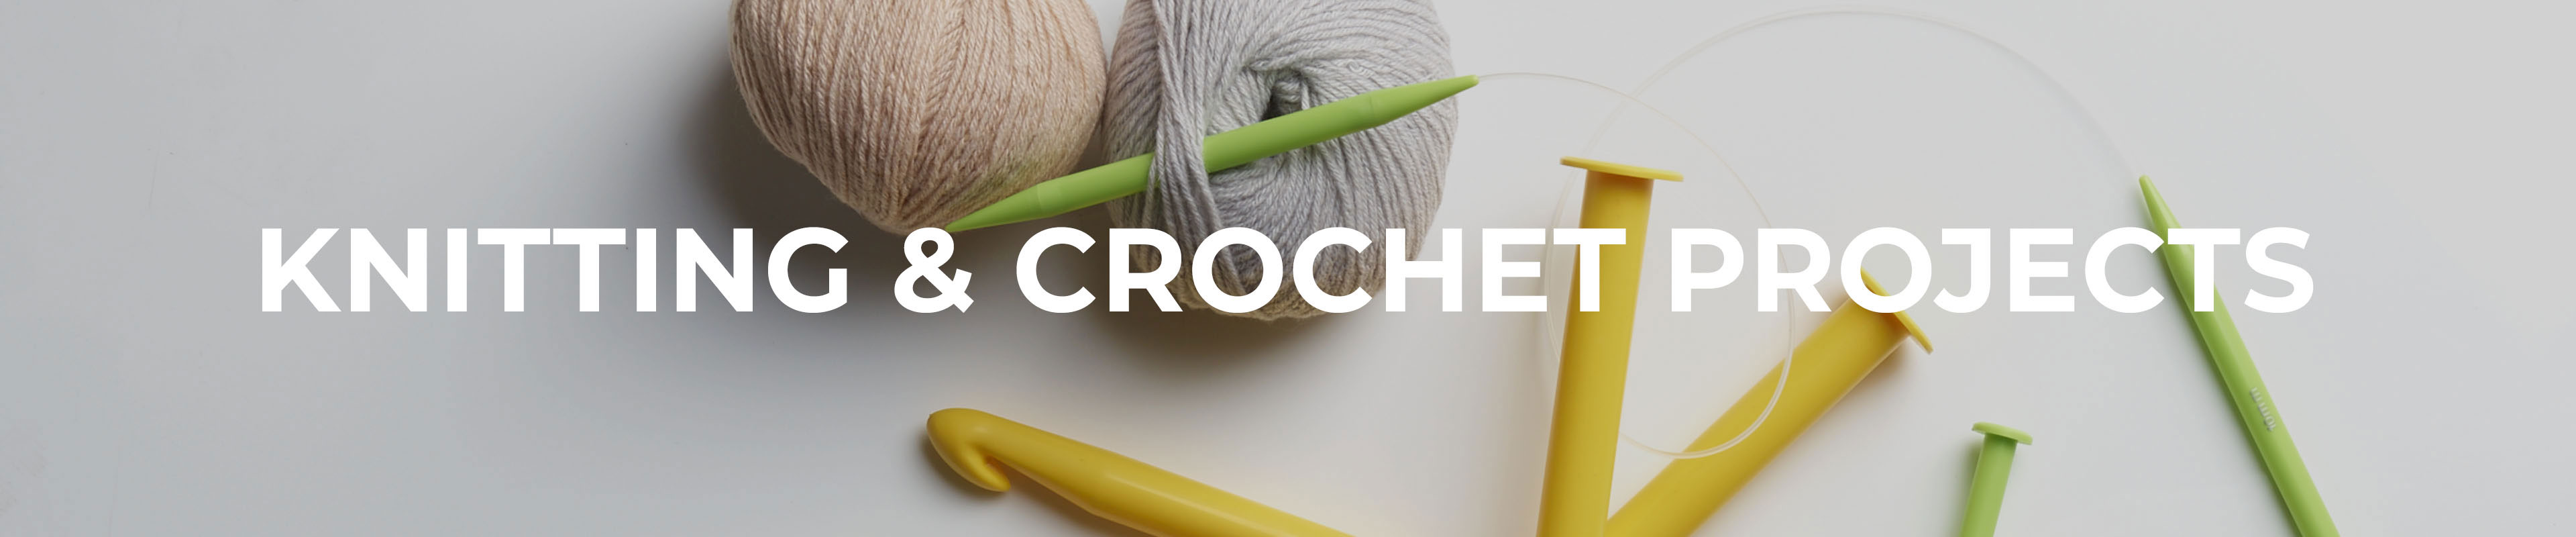 Knitting & Crochet Projects